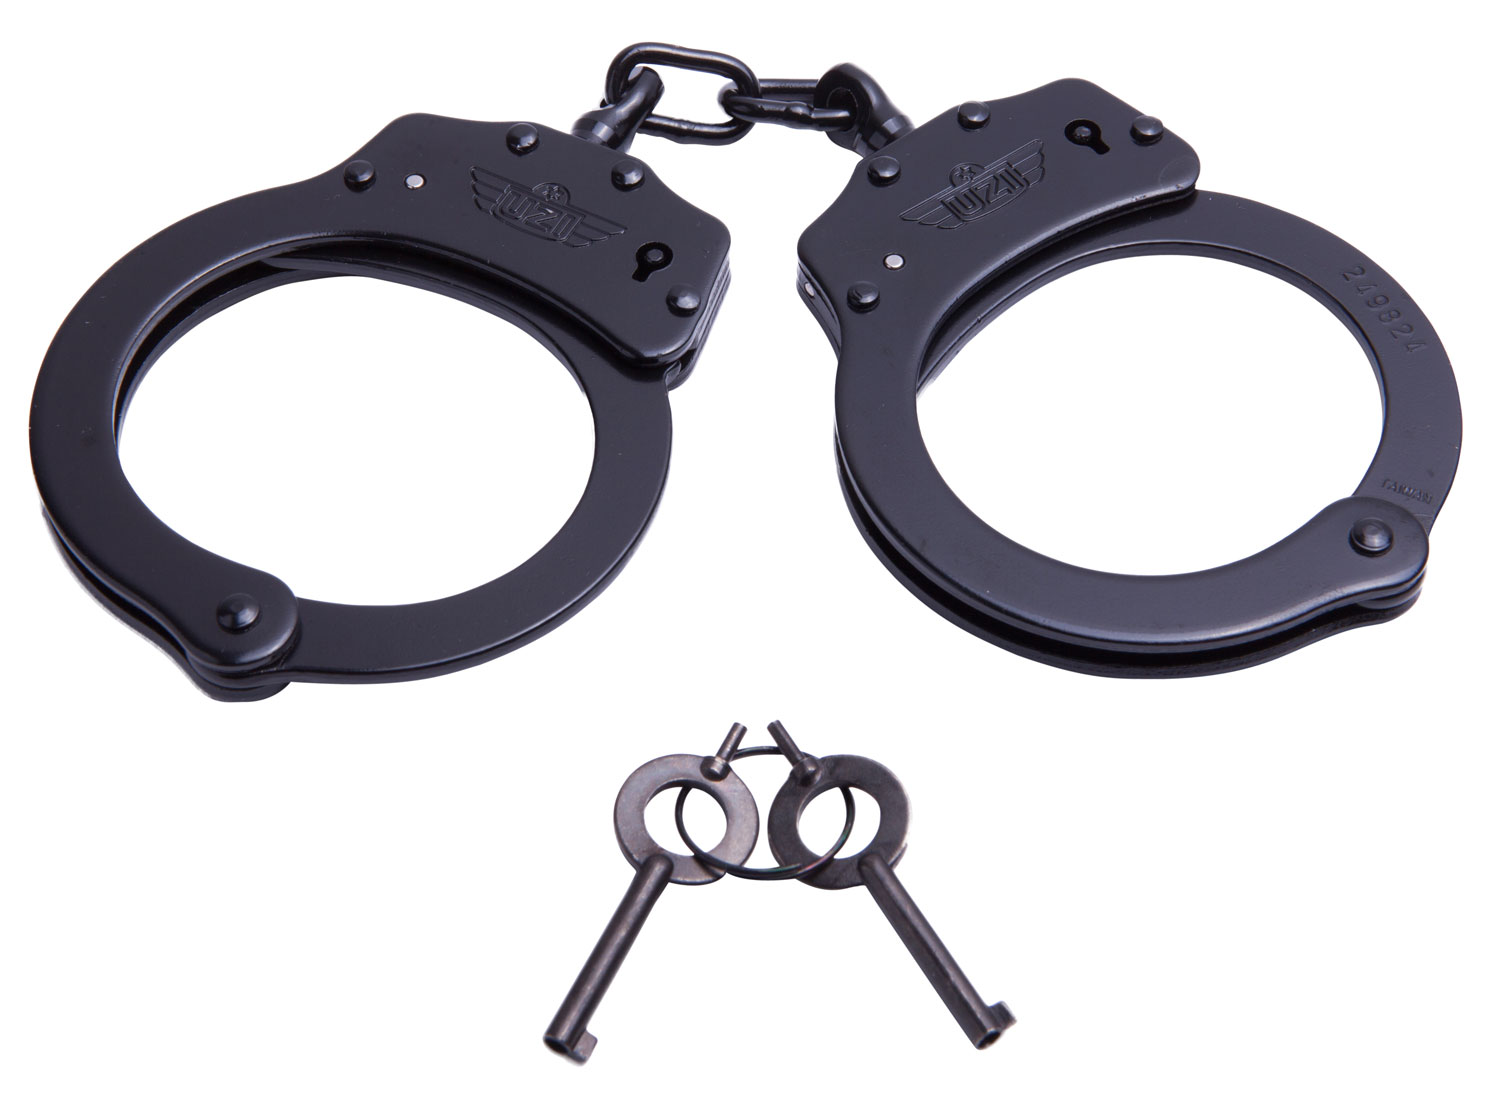 Uzi Accessories UZIHCCB Handcuffs Chain Black Stainless Steel Includes 2 Keys